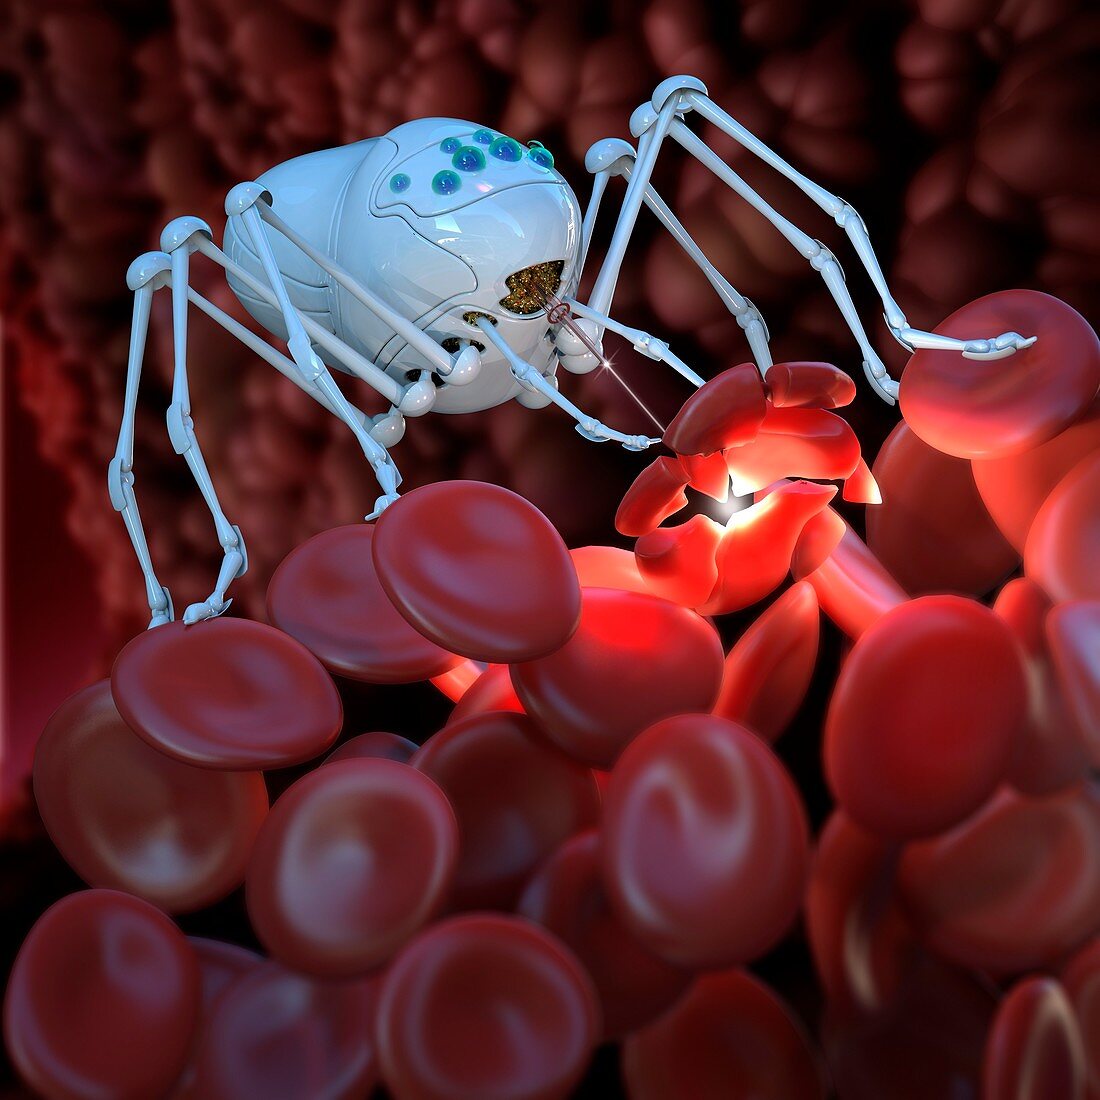 Nanobot destroying blood clot,concept